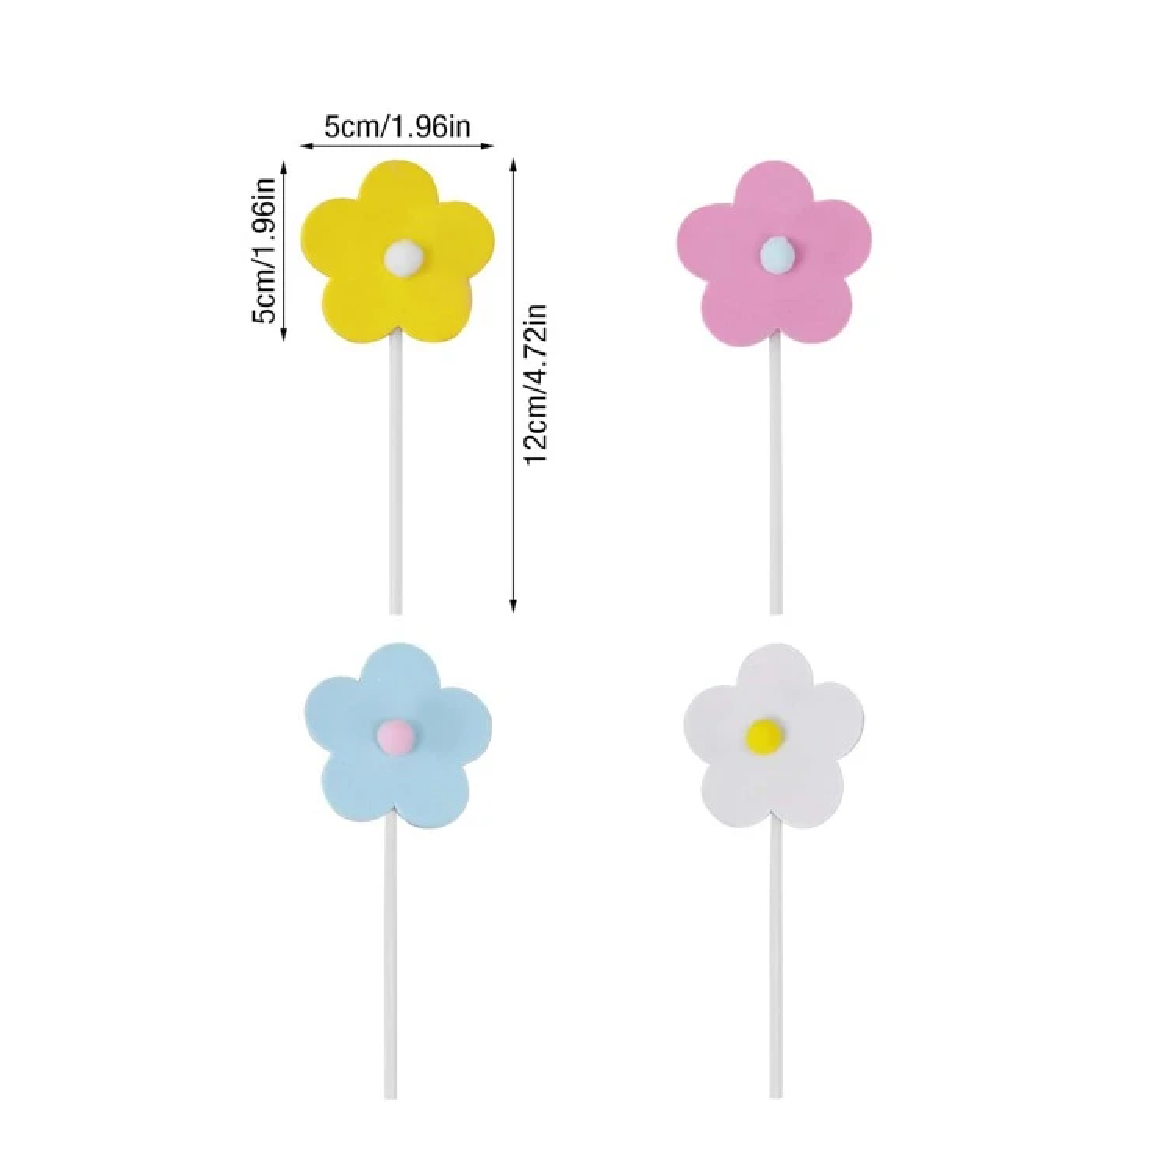 Cake Topper, Cupcake Decorations - Daisy Flower Shape - Set of 4pcs